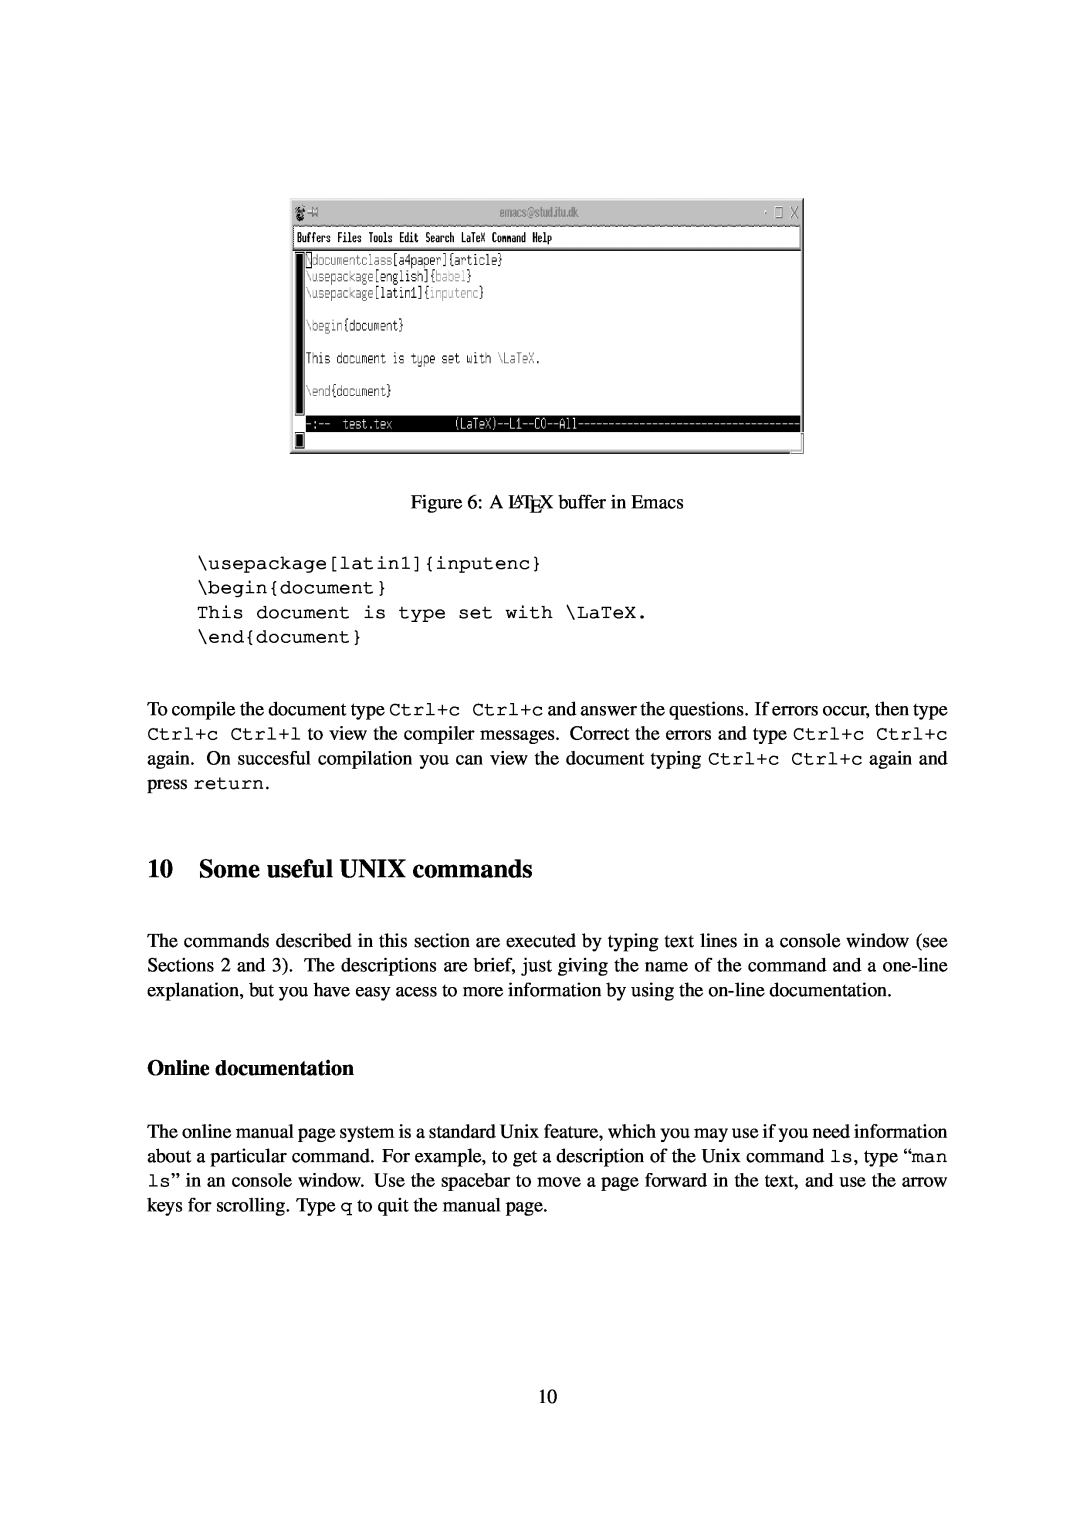 Spring Switzerland GmbH 2000 manual Some useful UNIX commands, Online documentation 